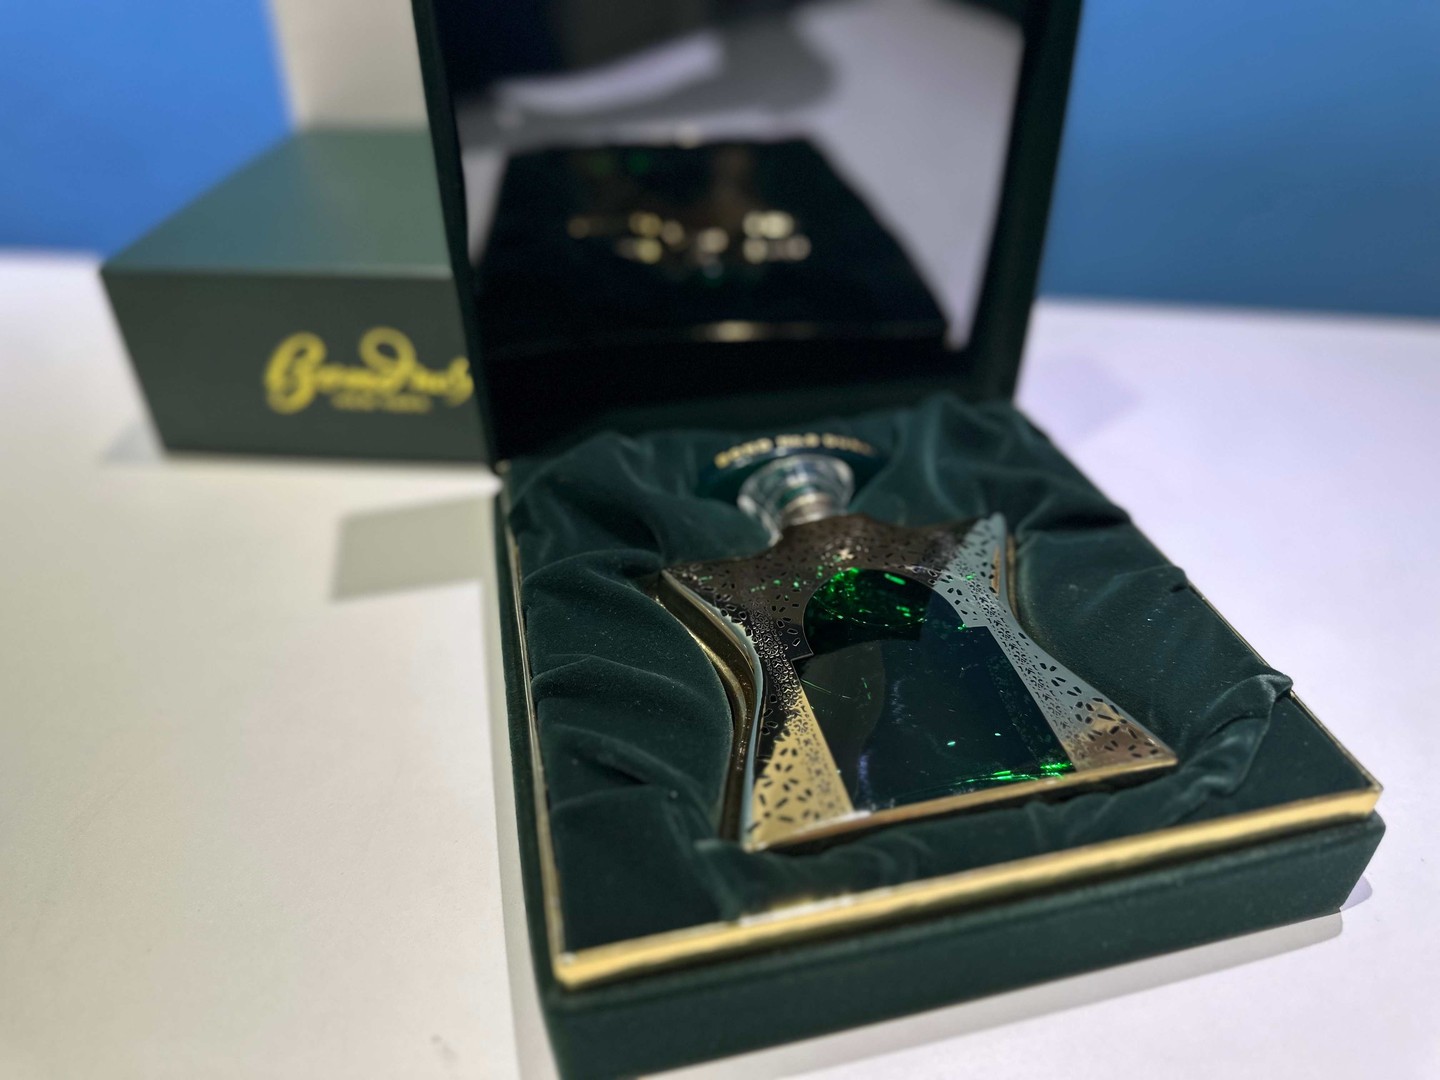 joyas, relojes y accesorios - Vendo Perfume Bond NO.9 DUBAI EMERALD 100ML Nuevo, Original, RD$ 19,500 NEG 0